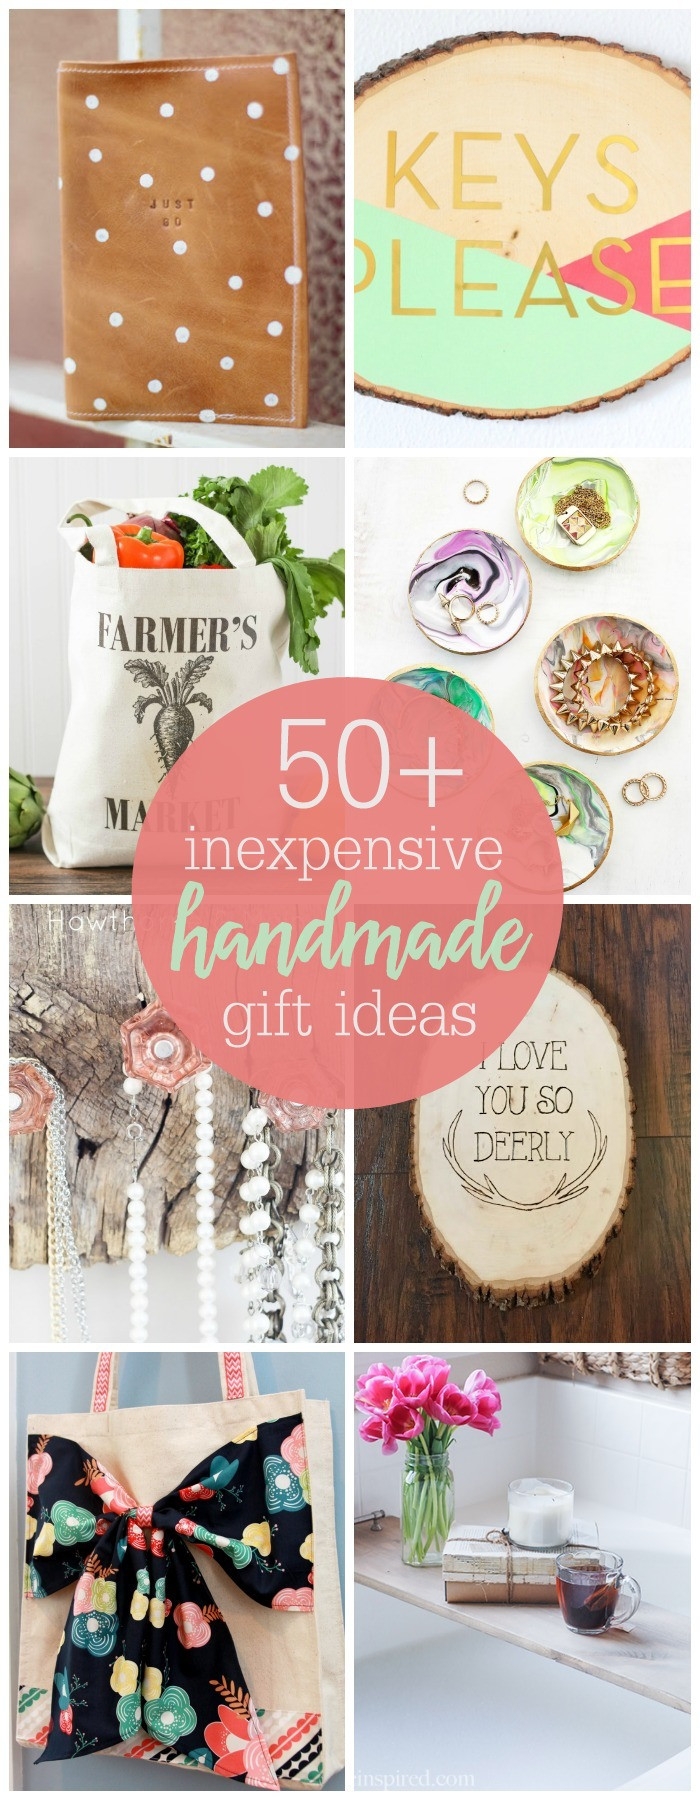 DIY Best Friend Christmas Gifts
 Inexpensive Handmade Gift Ideas